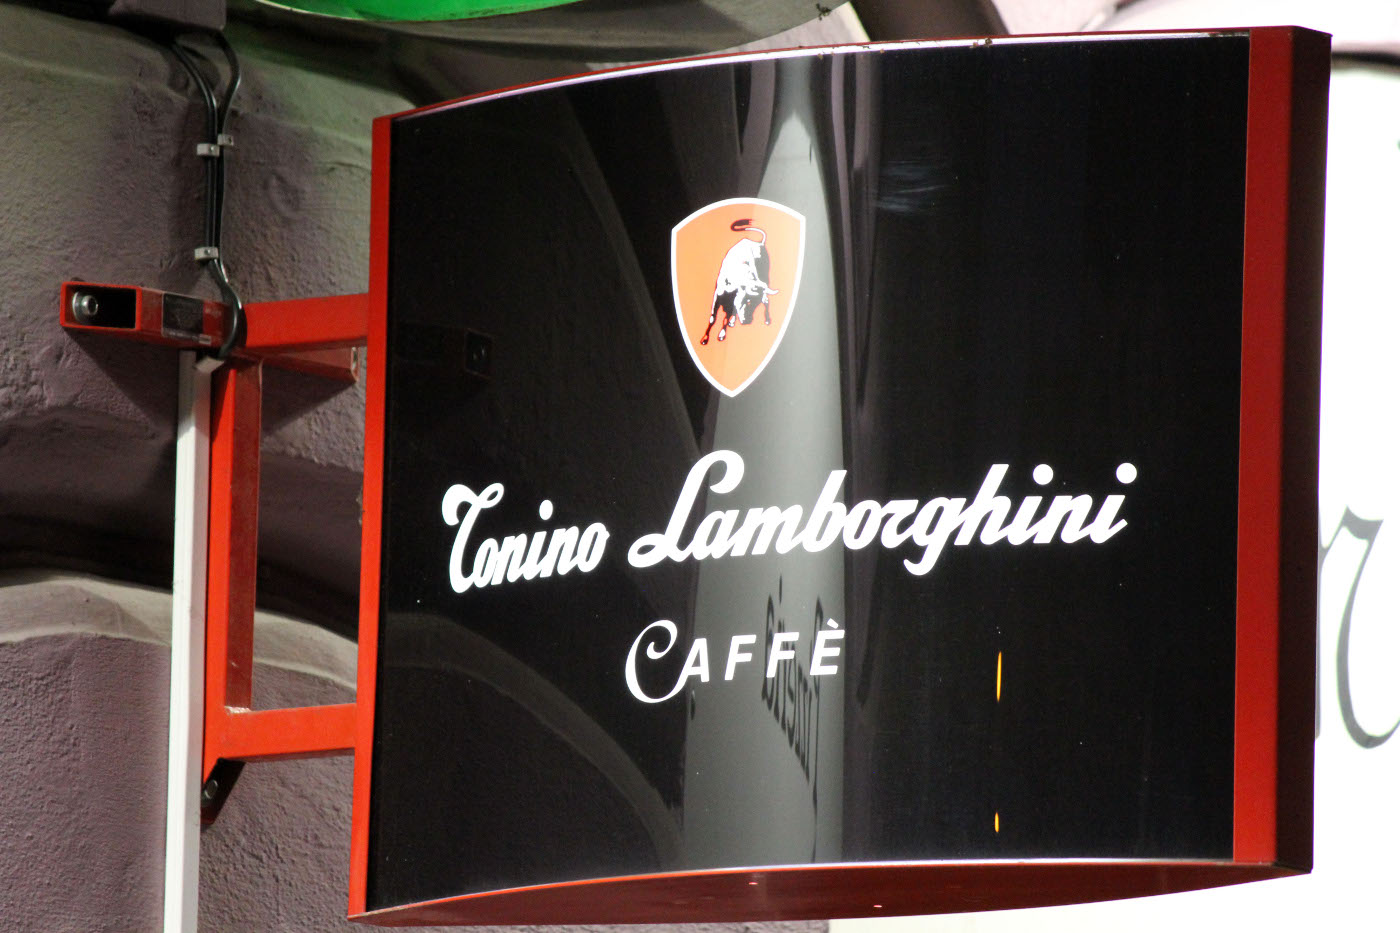 Canino Lamborghini